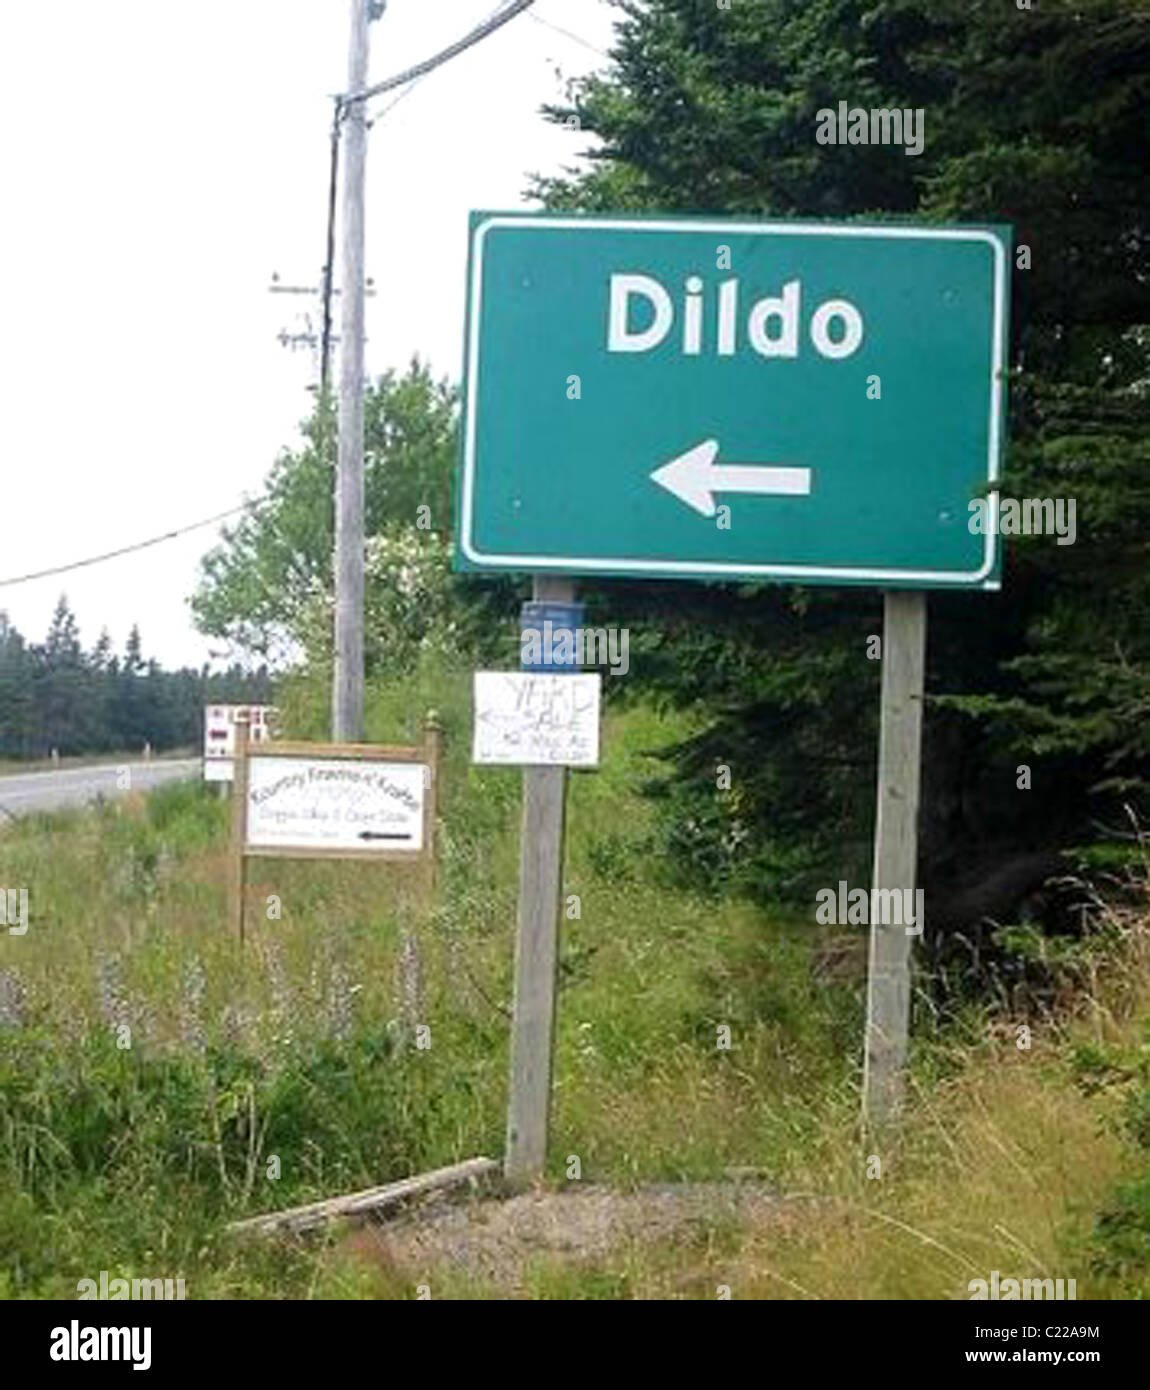 Funny Road Signs - Dildo Stock Photo - Alamy